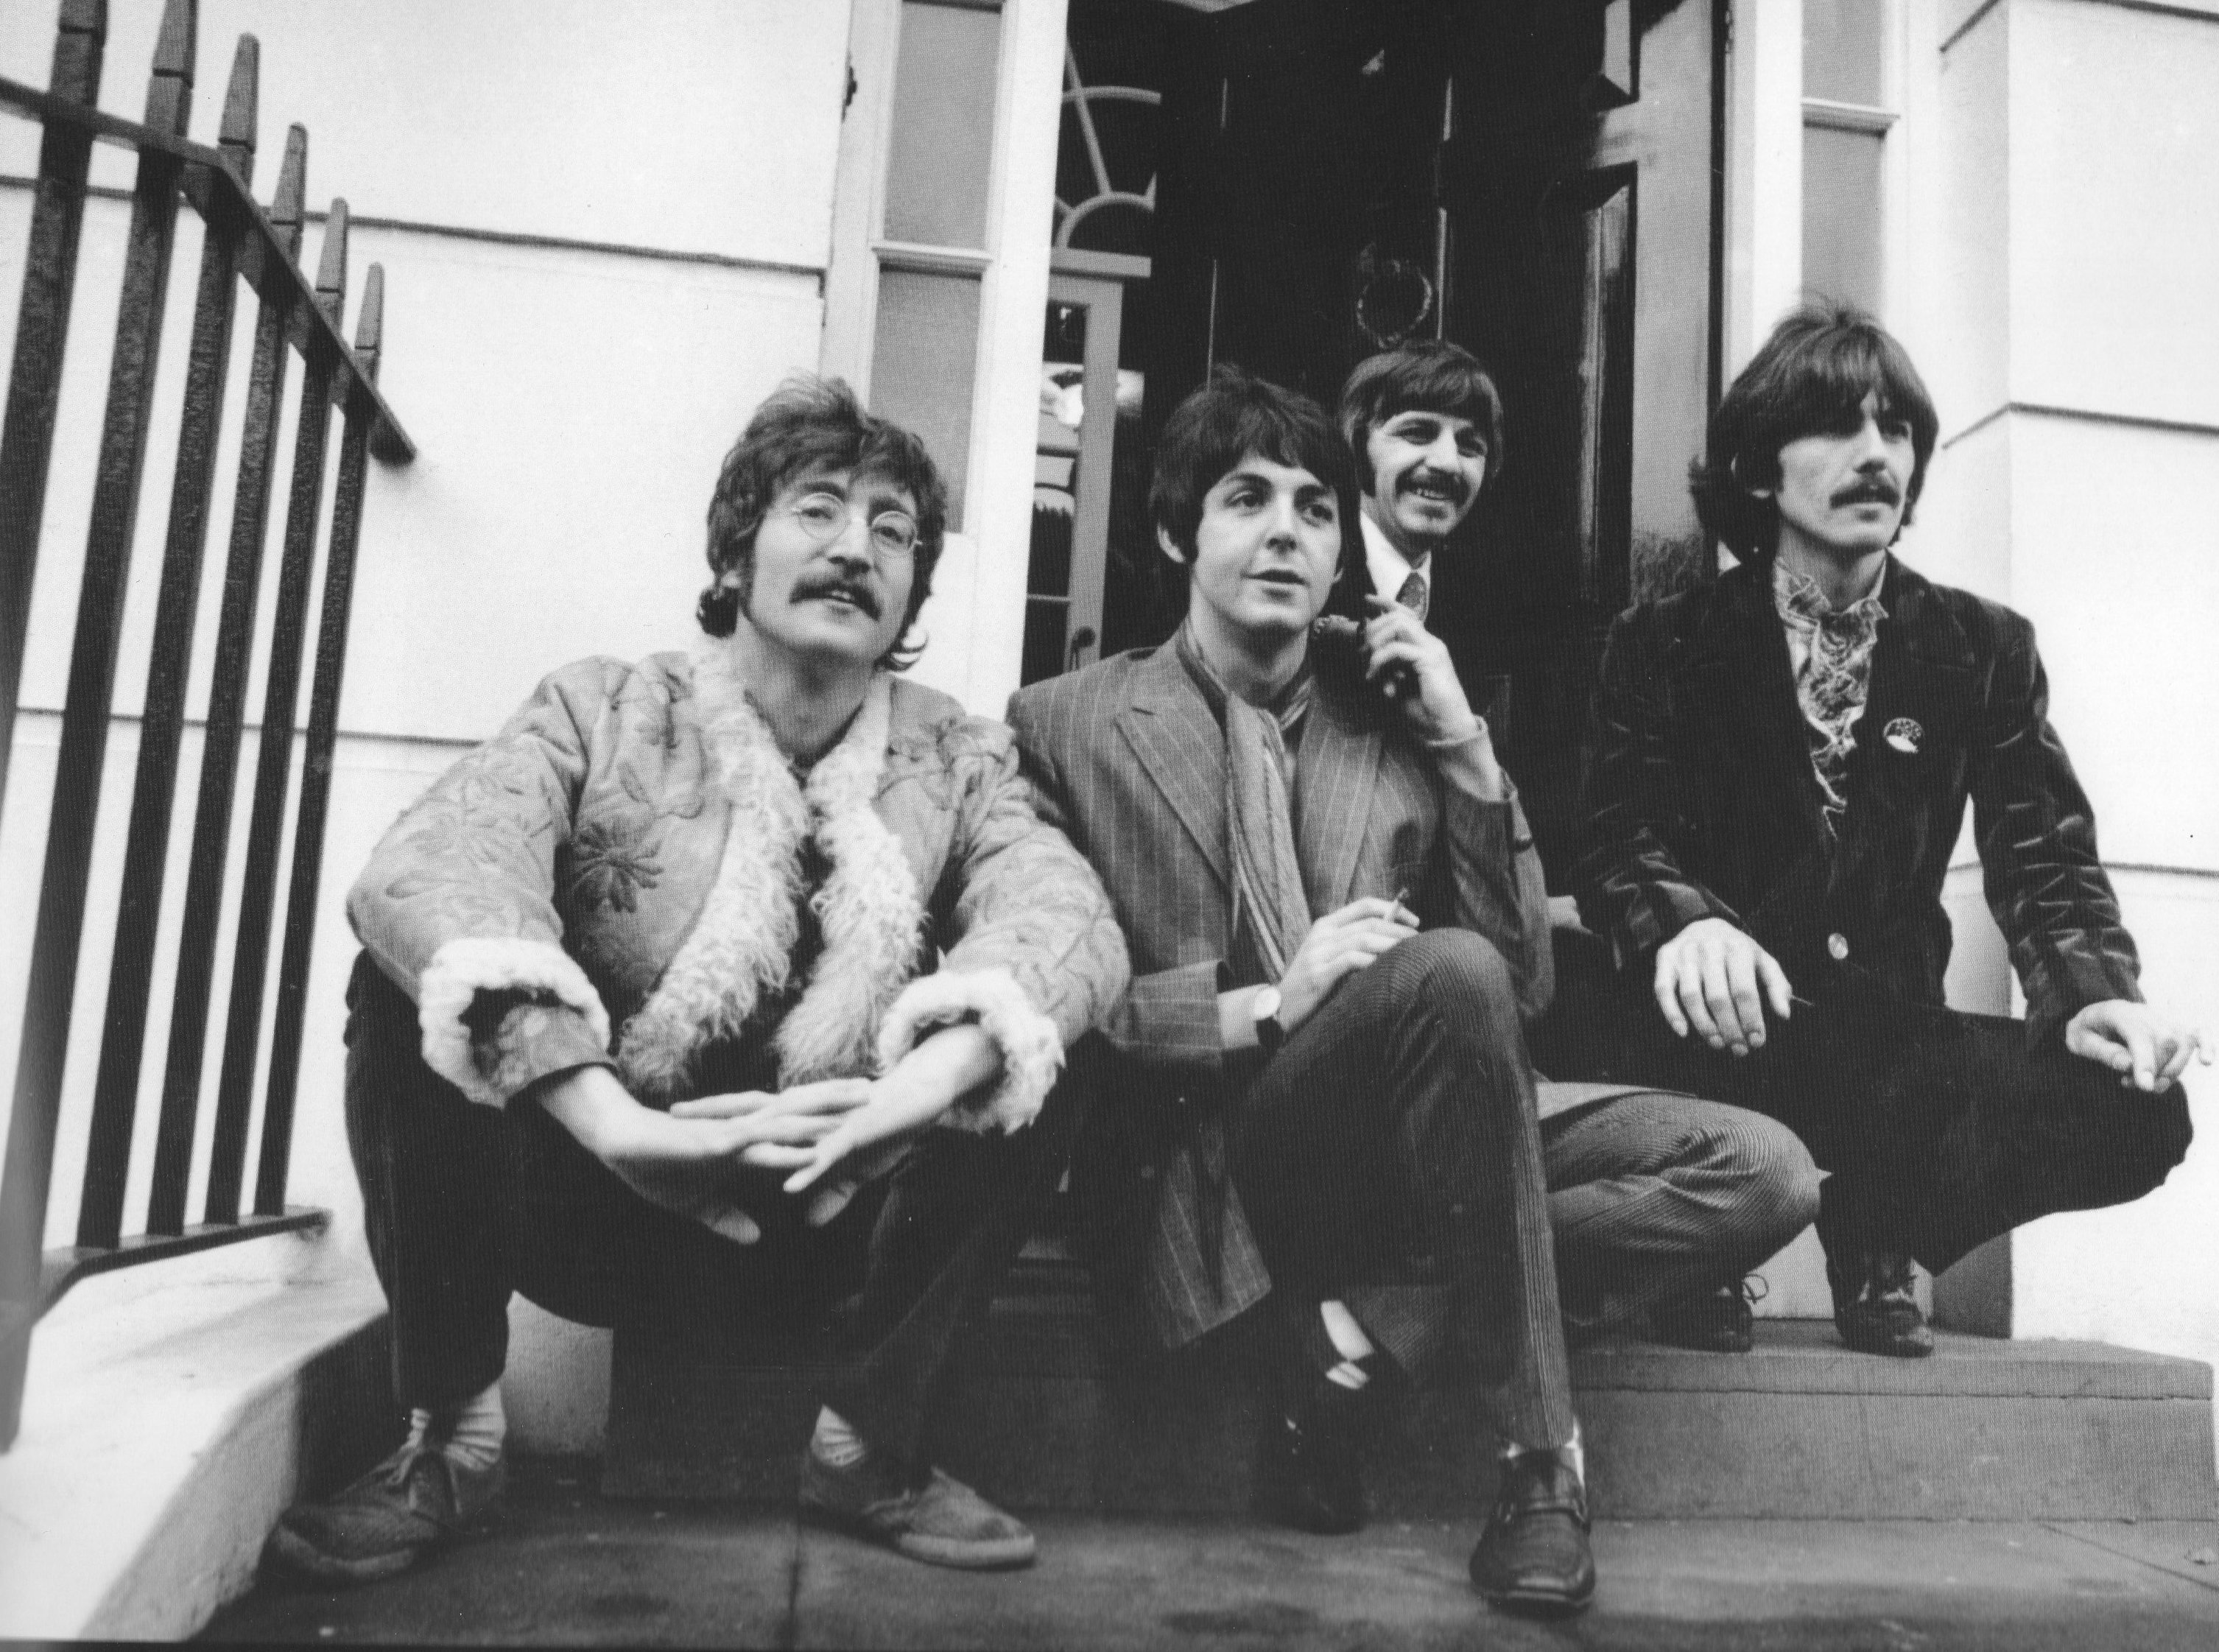 Similar artists - The Beatles | Last.fm